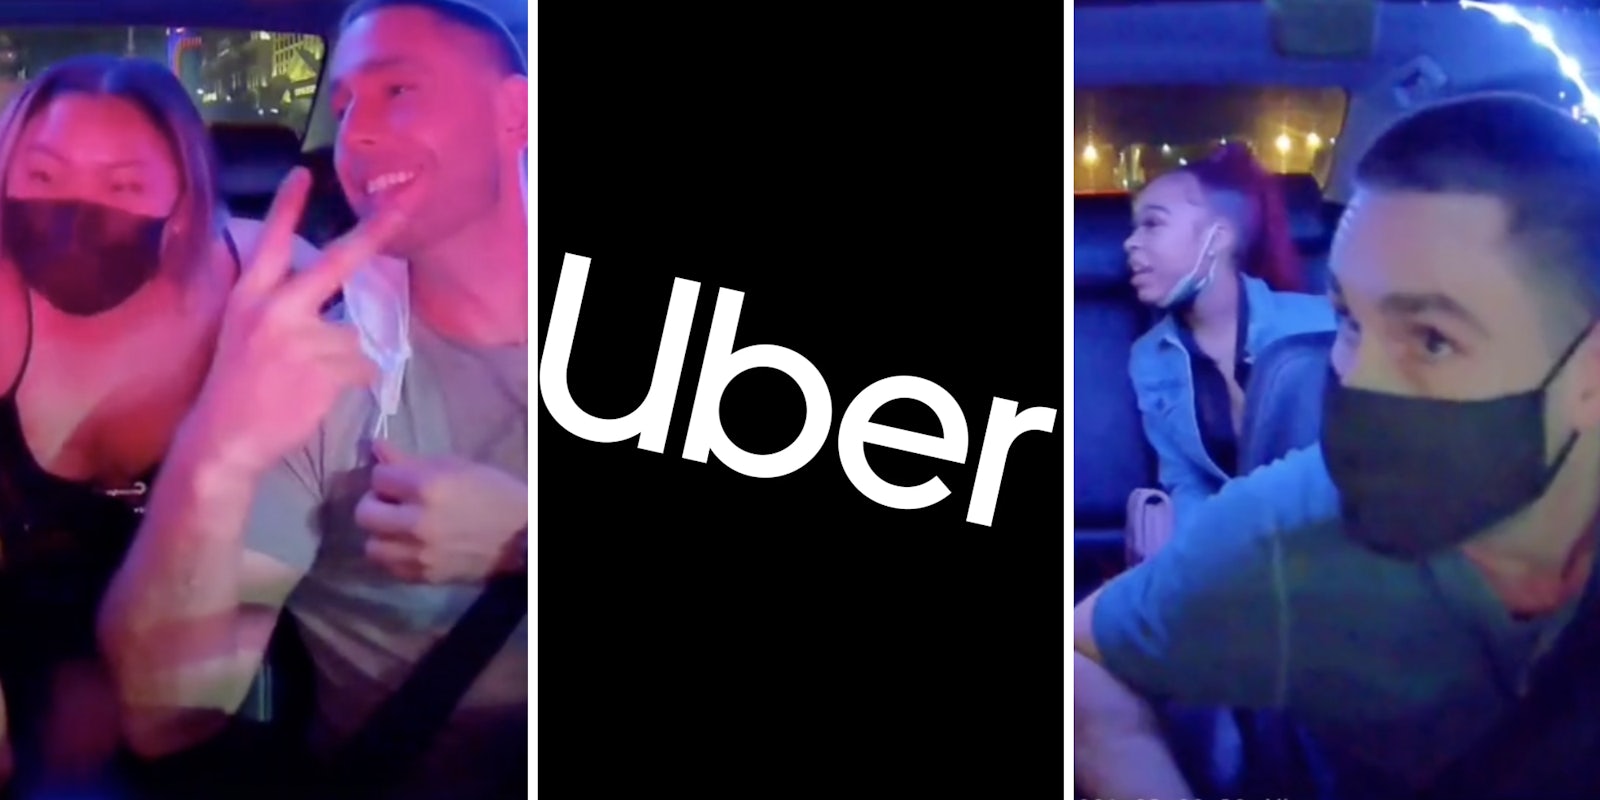 women sitting in car hitting on their male driver (l) (r) uber logo (c)